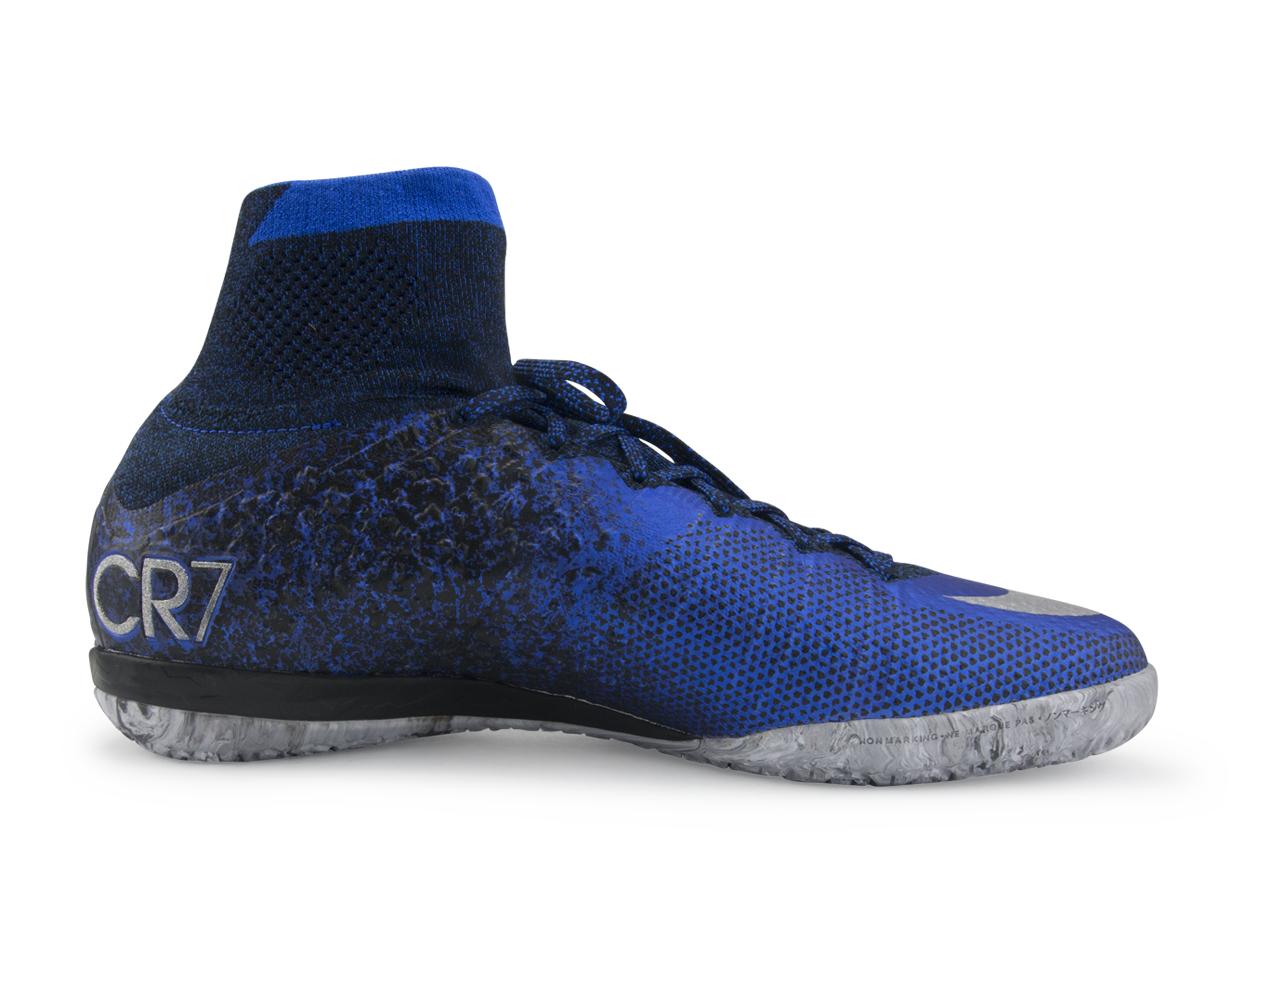 Nike Men's MercurialX Proximo CR Indoor Soccer Shoes Deep Royal Blue/Metallic Silver